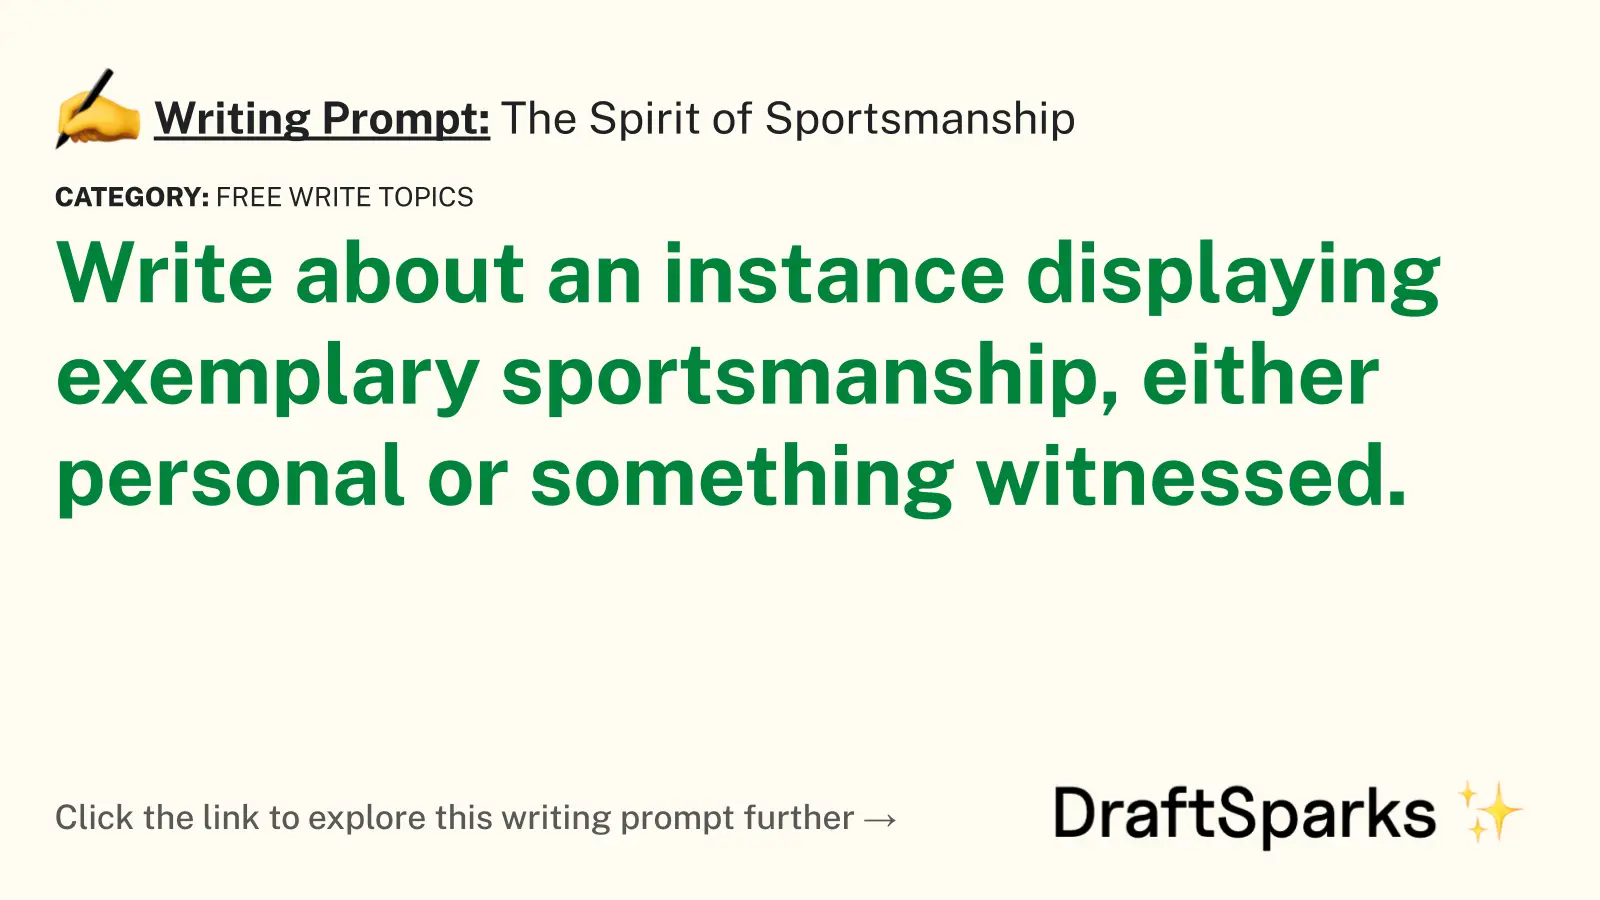 The Spirit of Sportsmanship